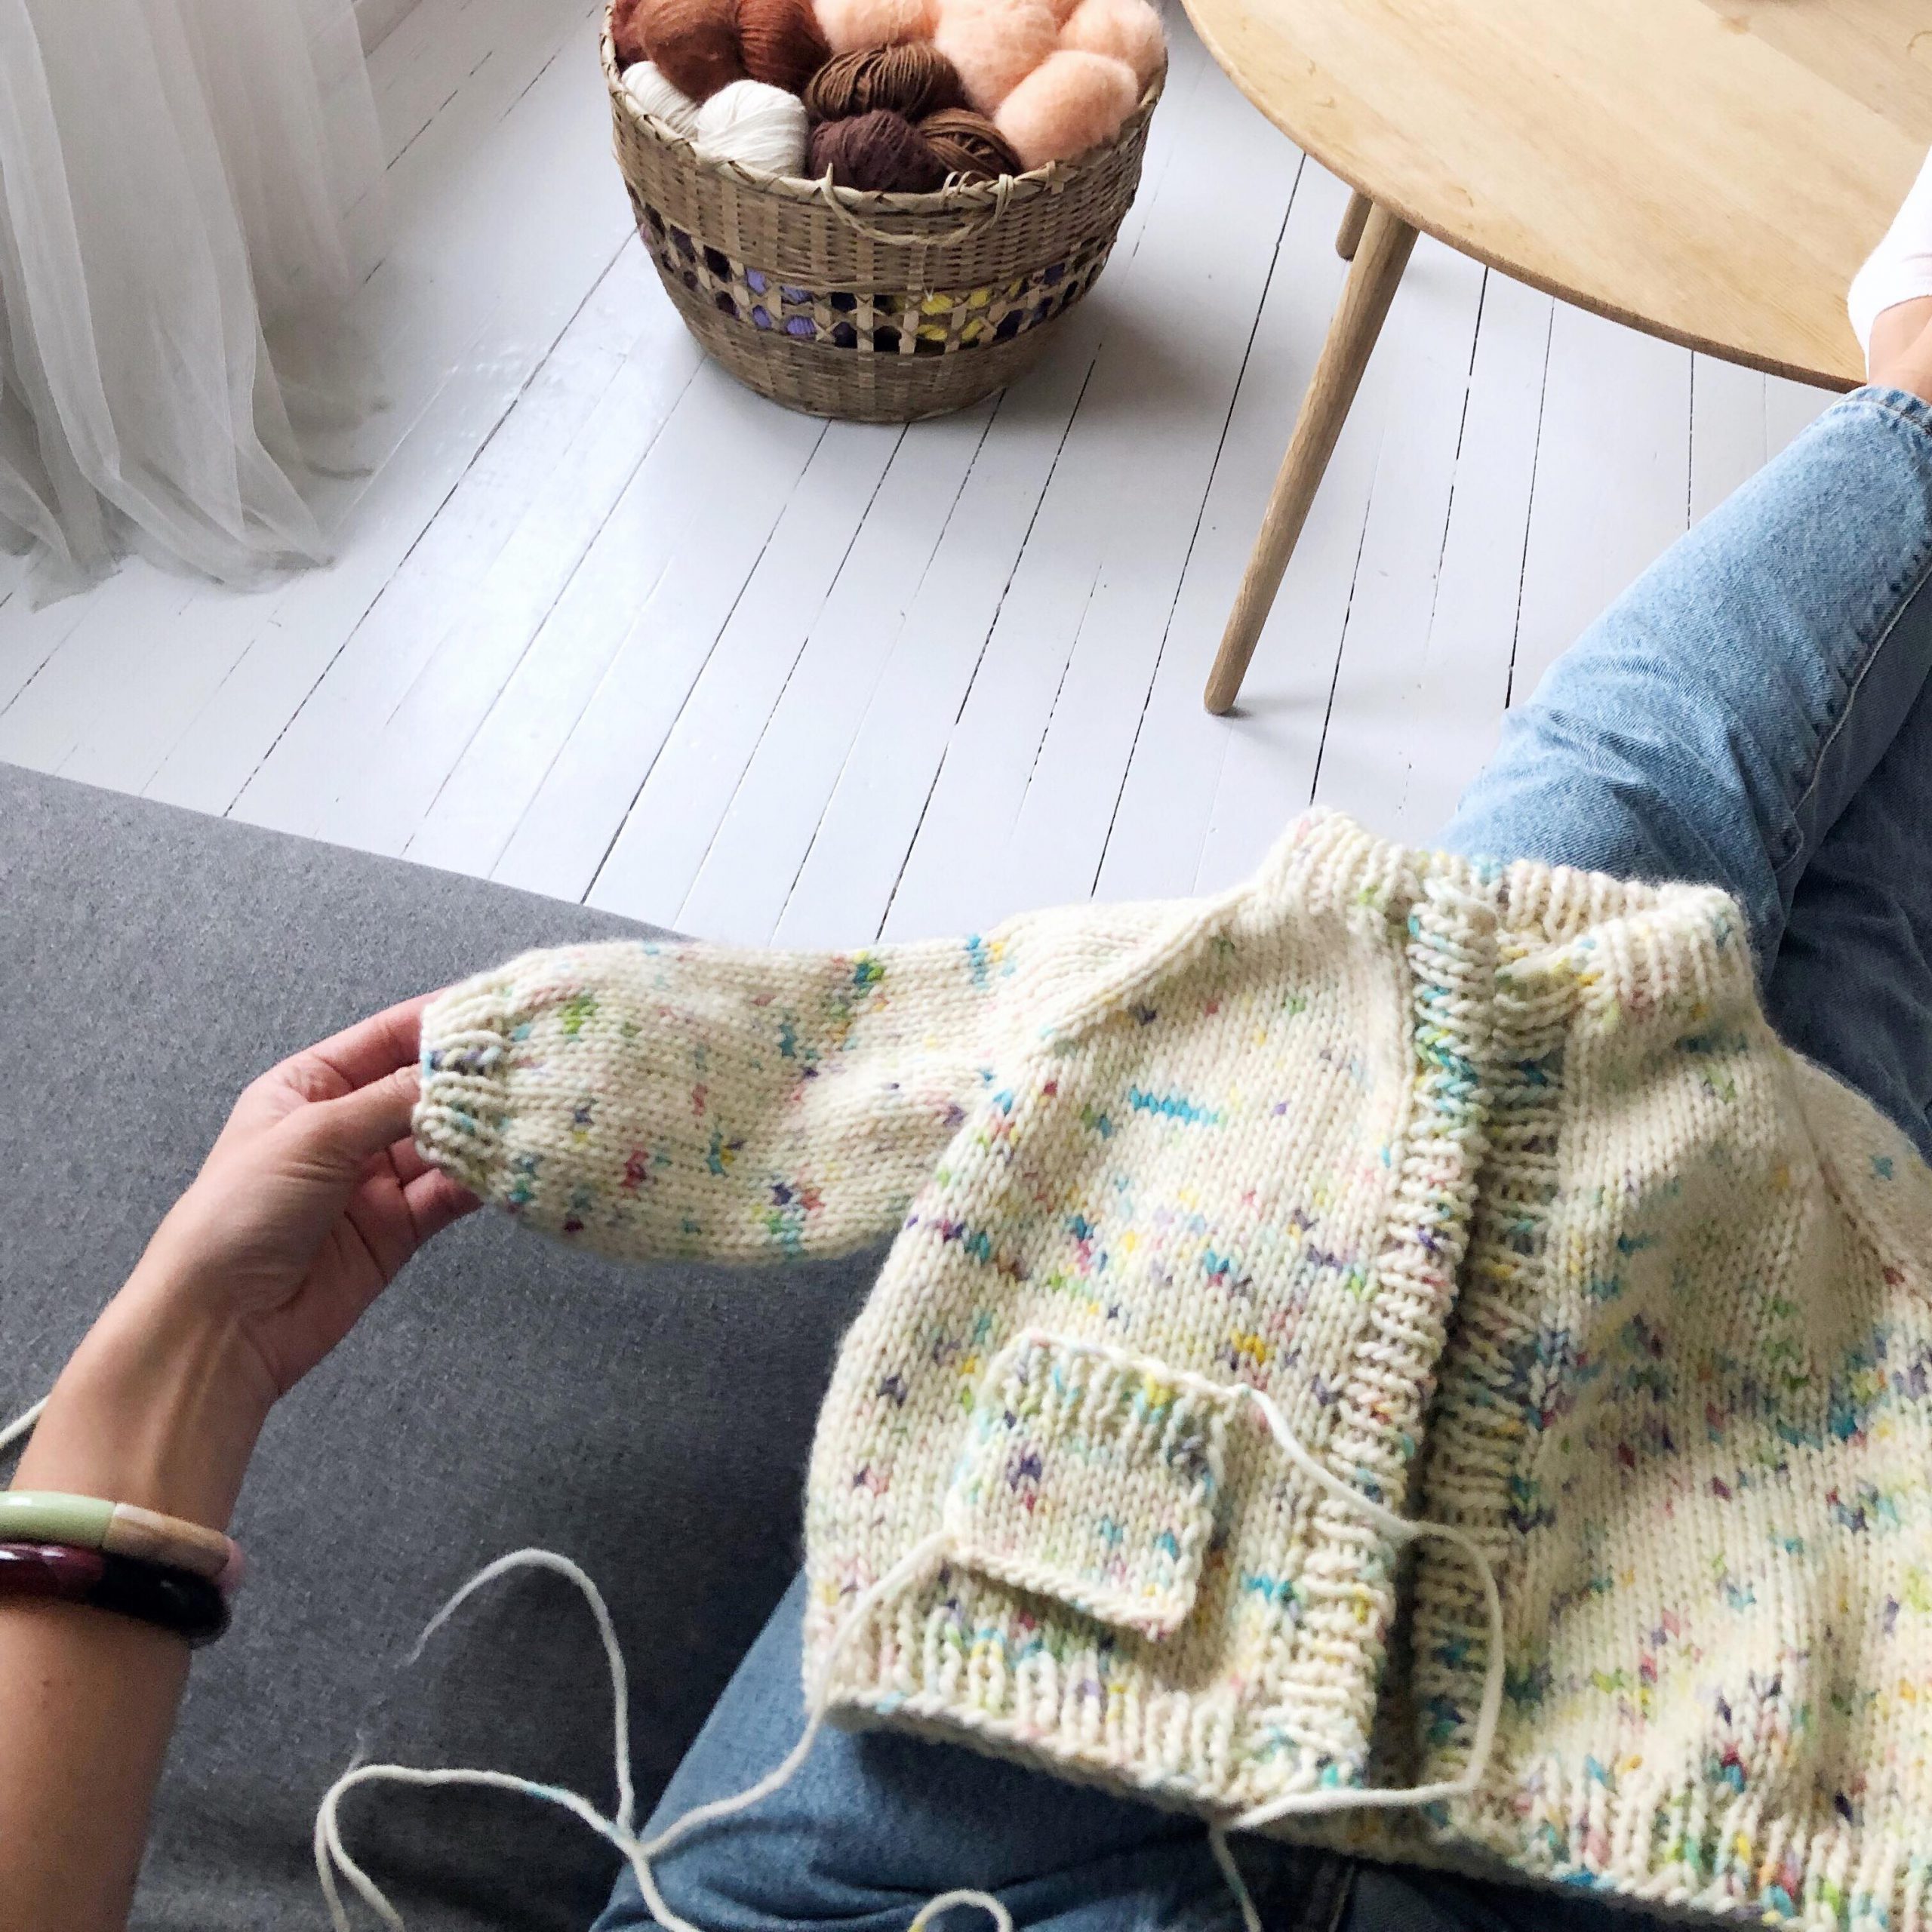  - Kids knitted cardigan | Tutti frutti cardigan - by HipKnitShop - 07/08/2019